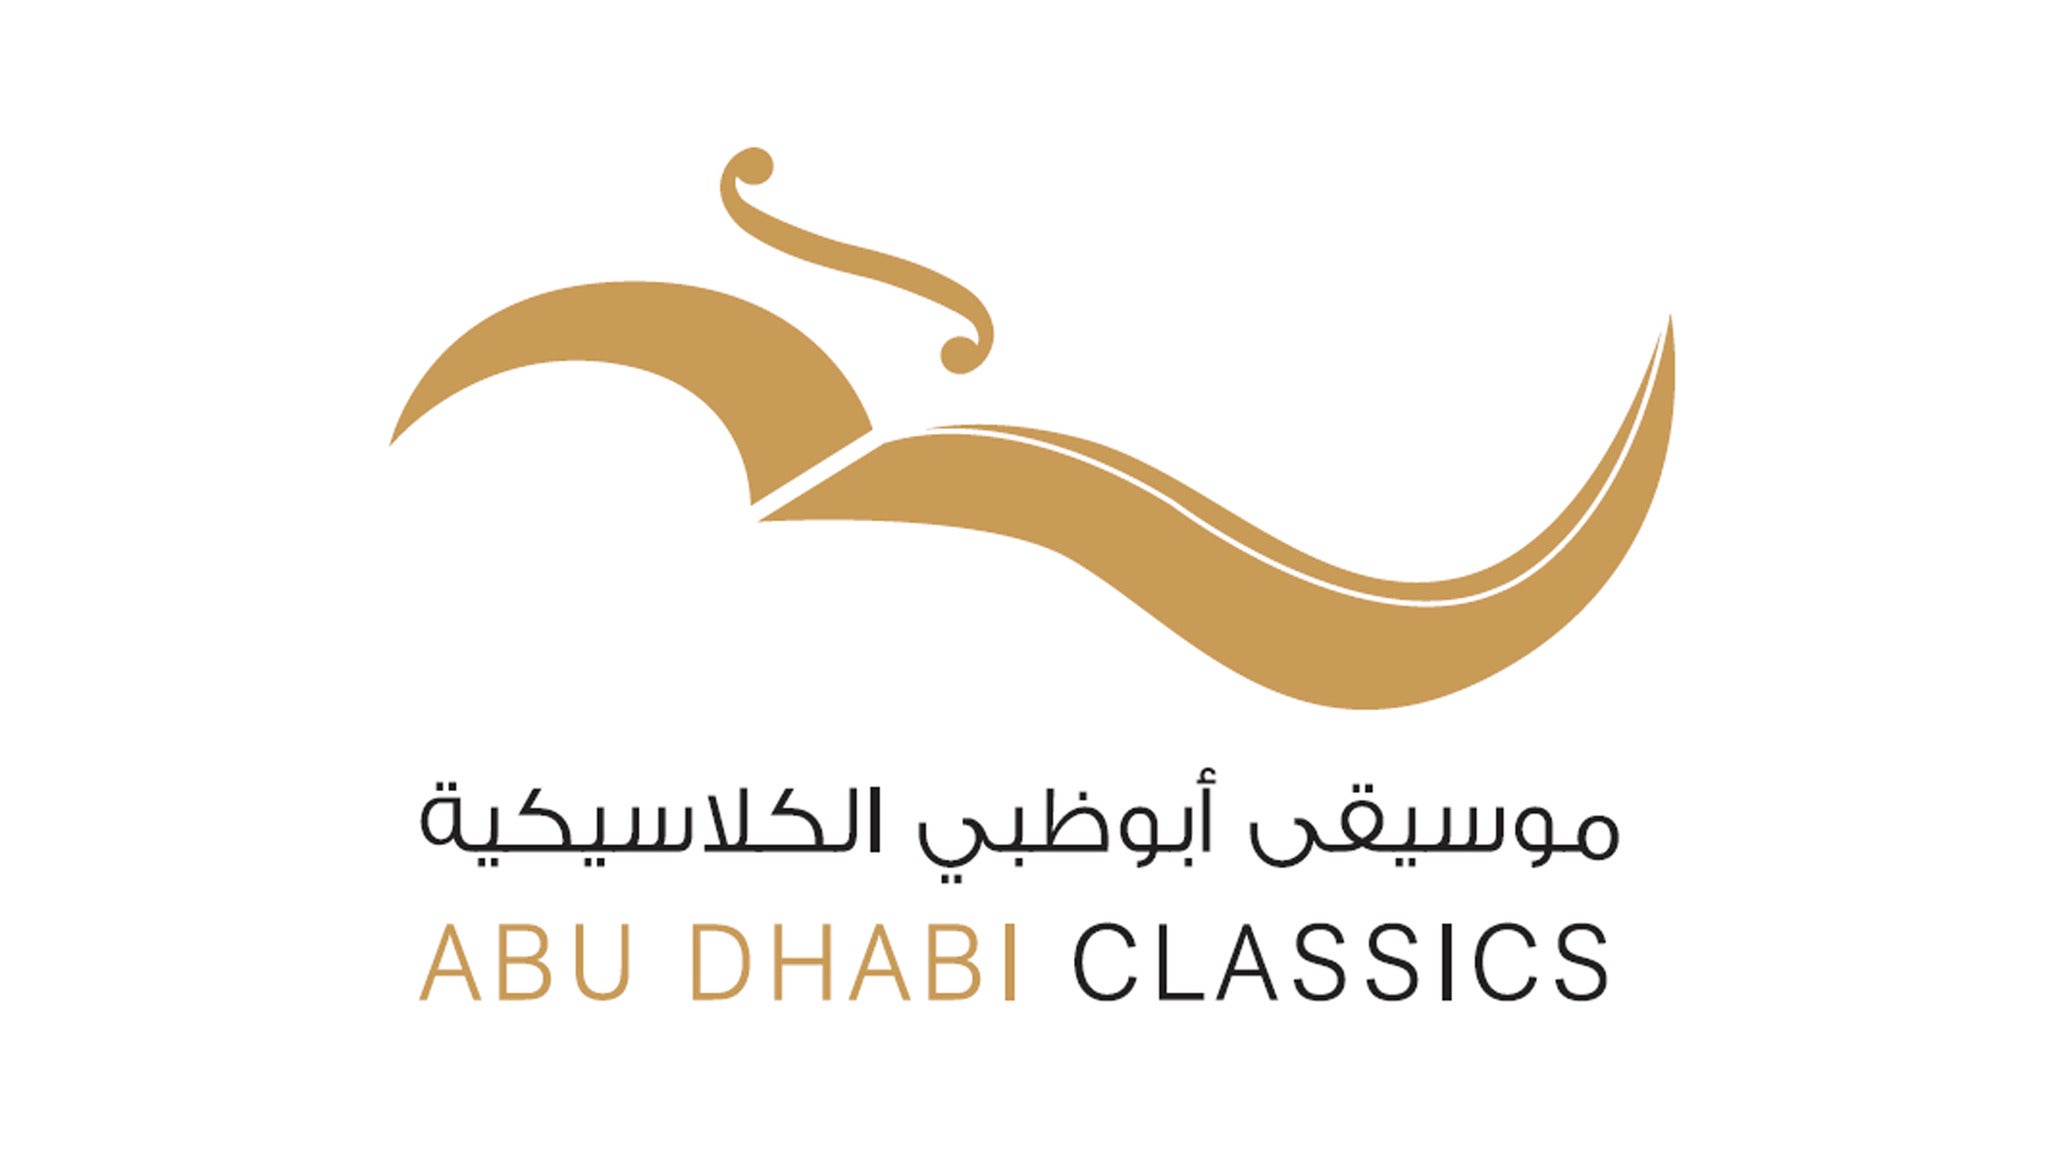 Abu Dhabi Classics presale information on freepresalepasswords.com